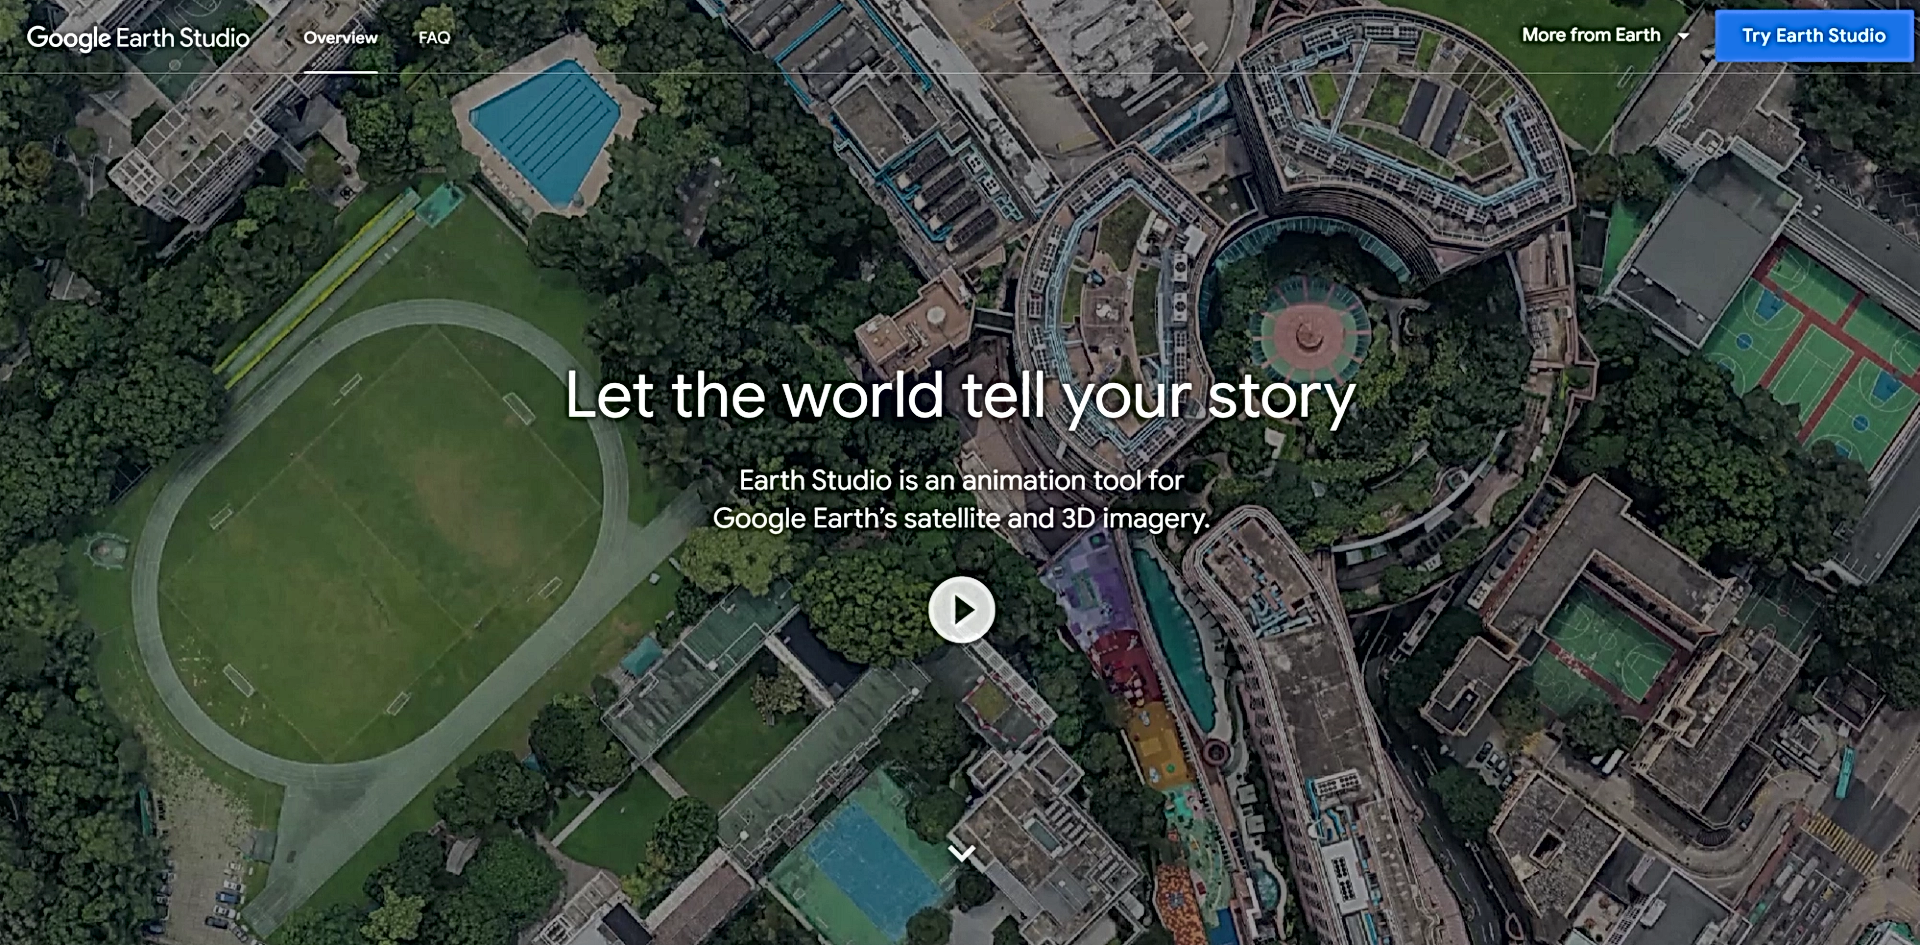 Google Earth Studio featured